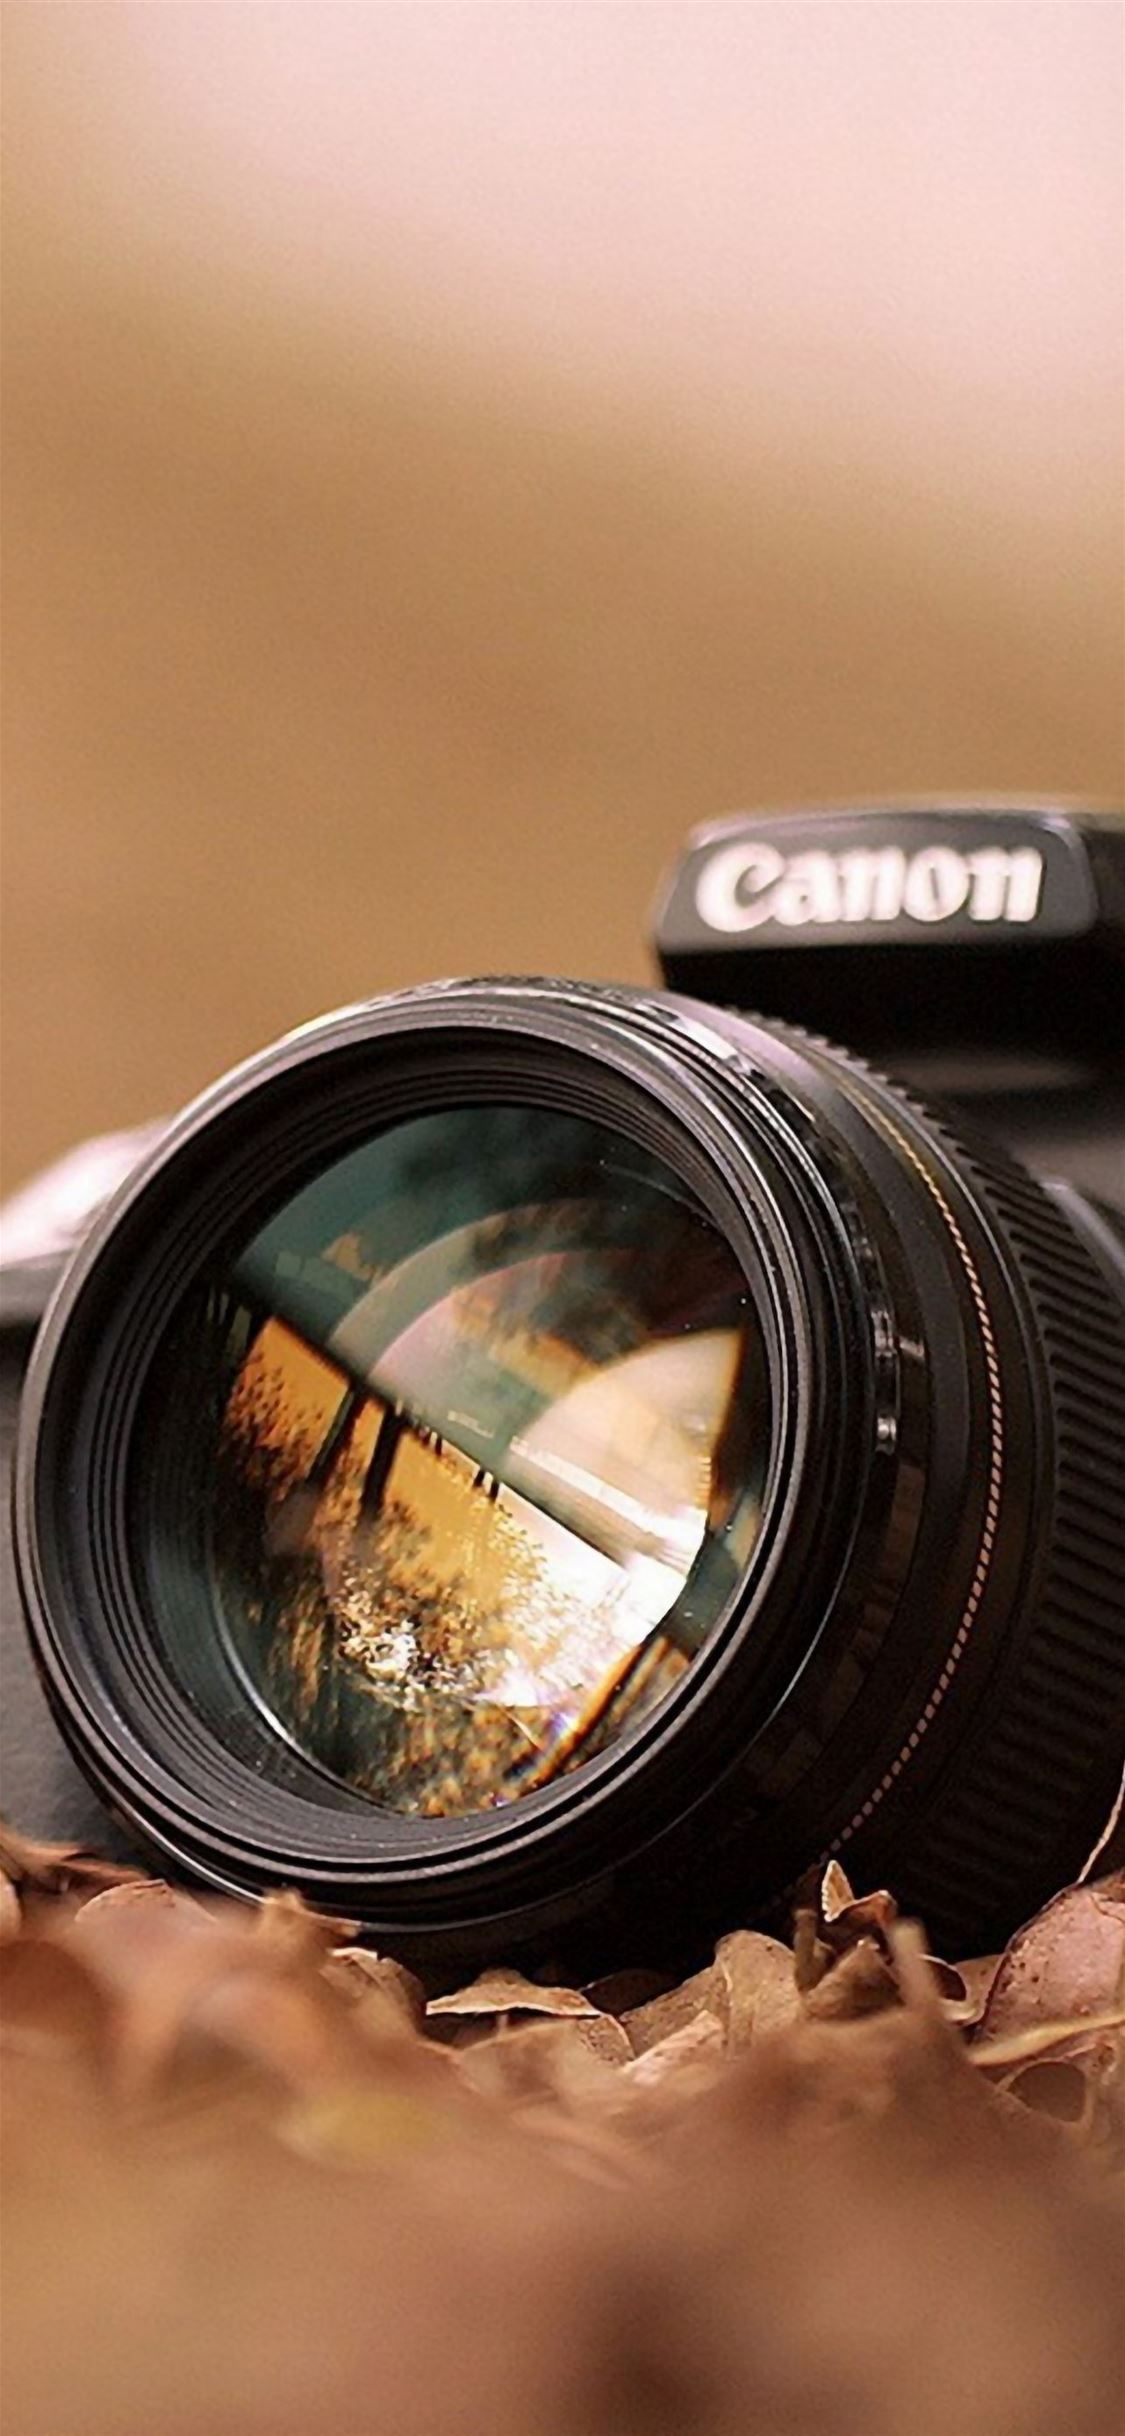 Canon Camera Macro Fall Leaves iPhone wallpaper 